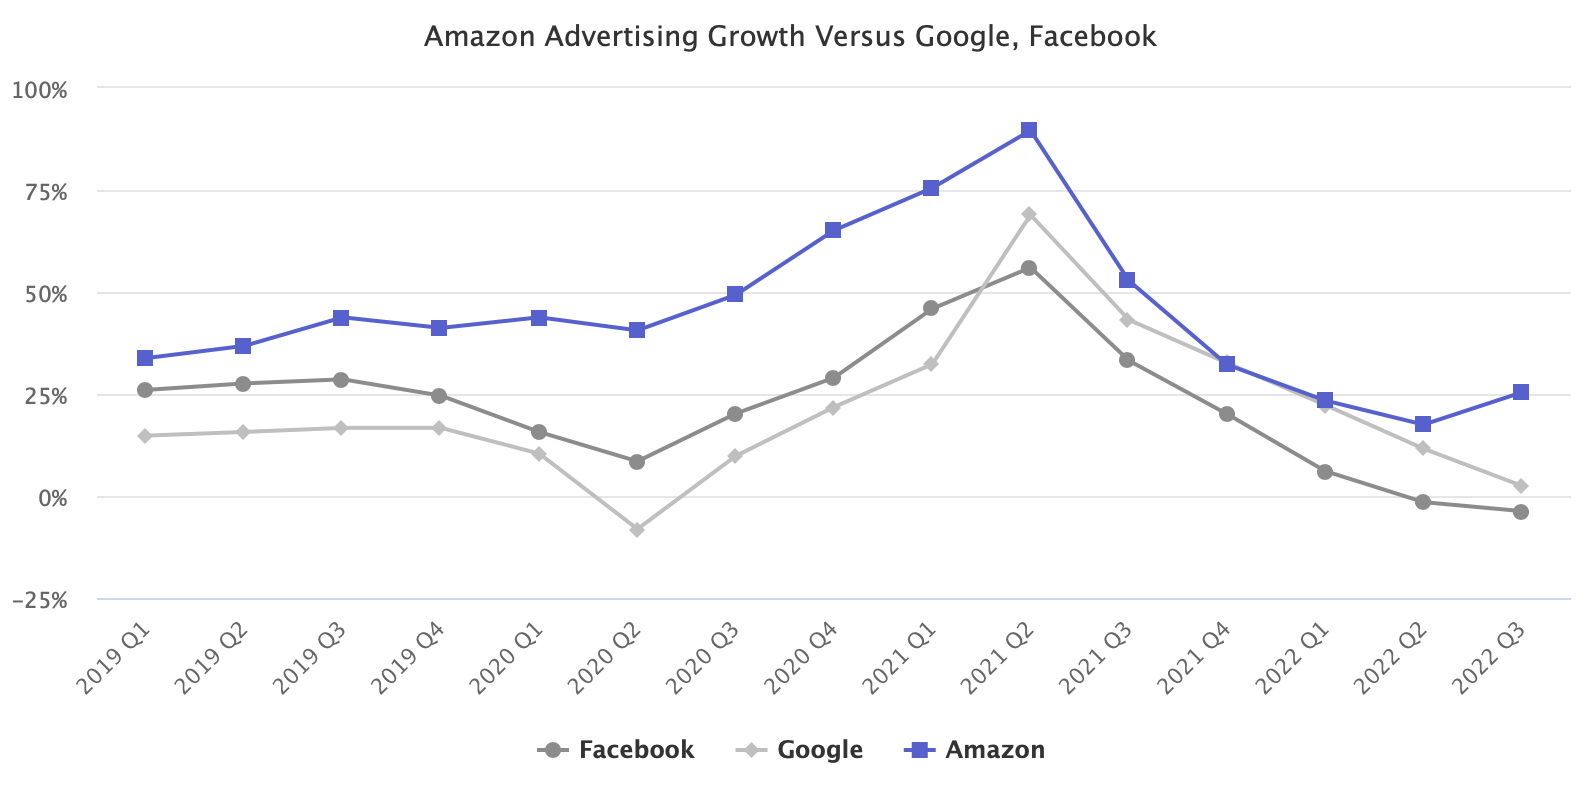 Amazon Advertising Growth Versus Google, Facebook